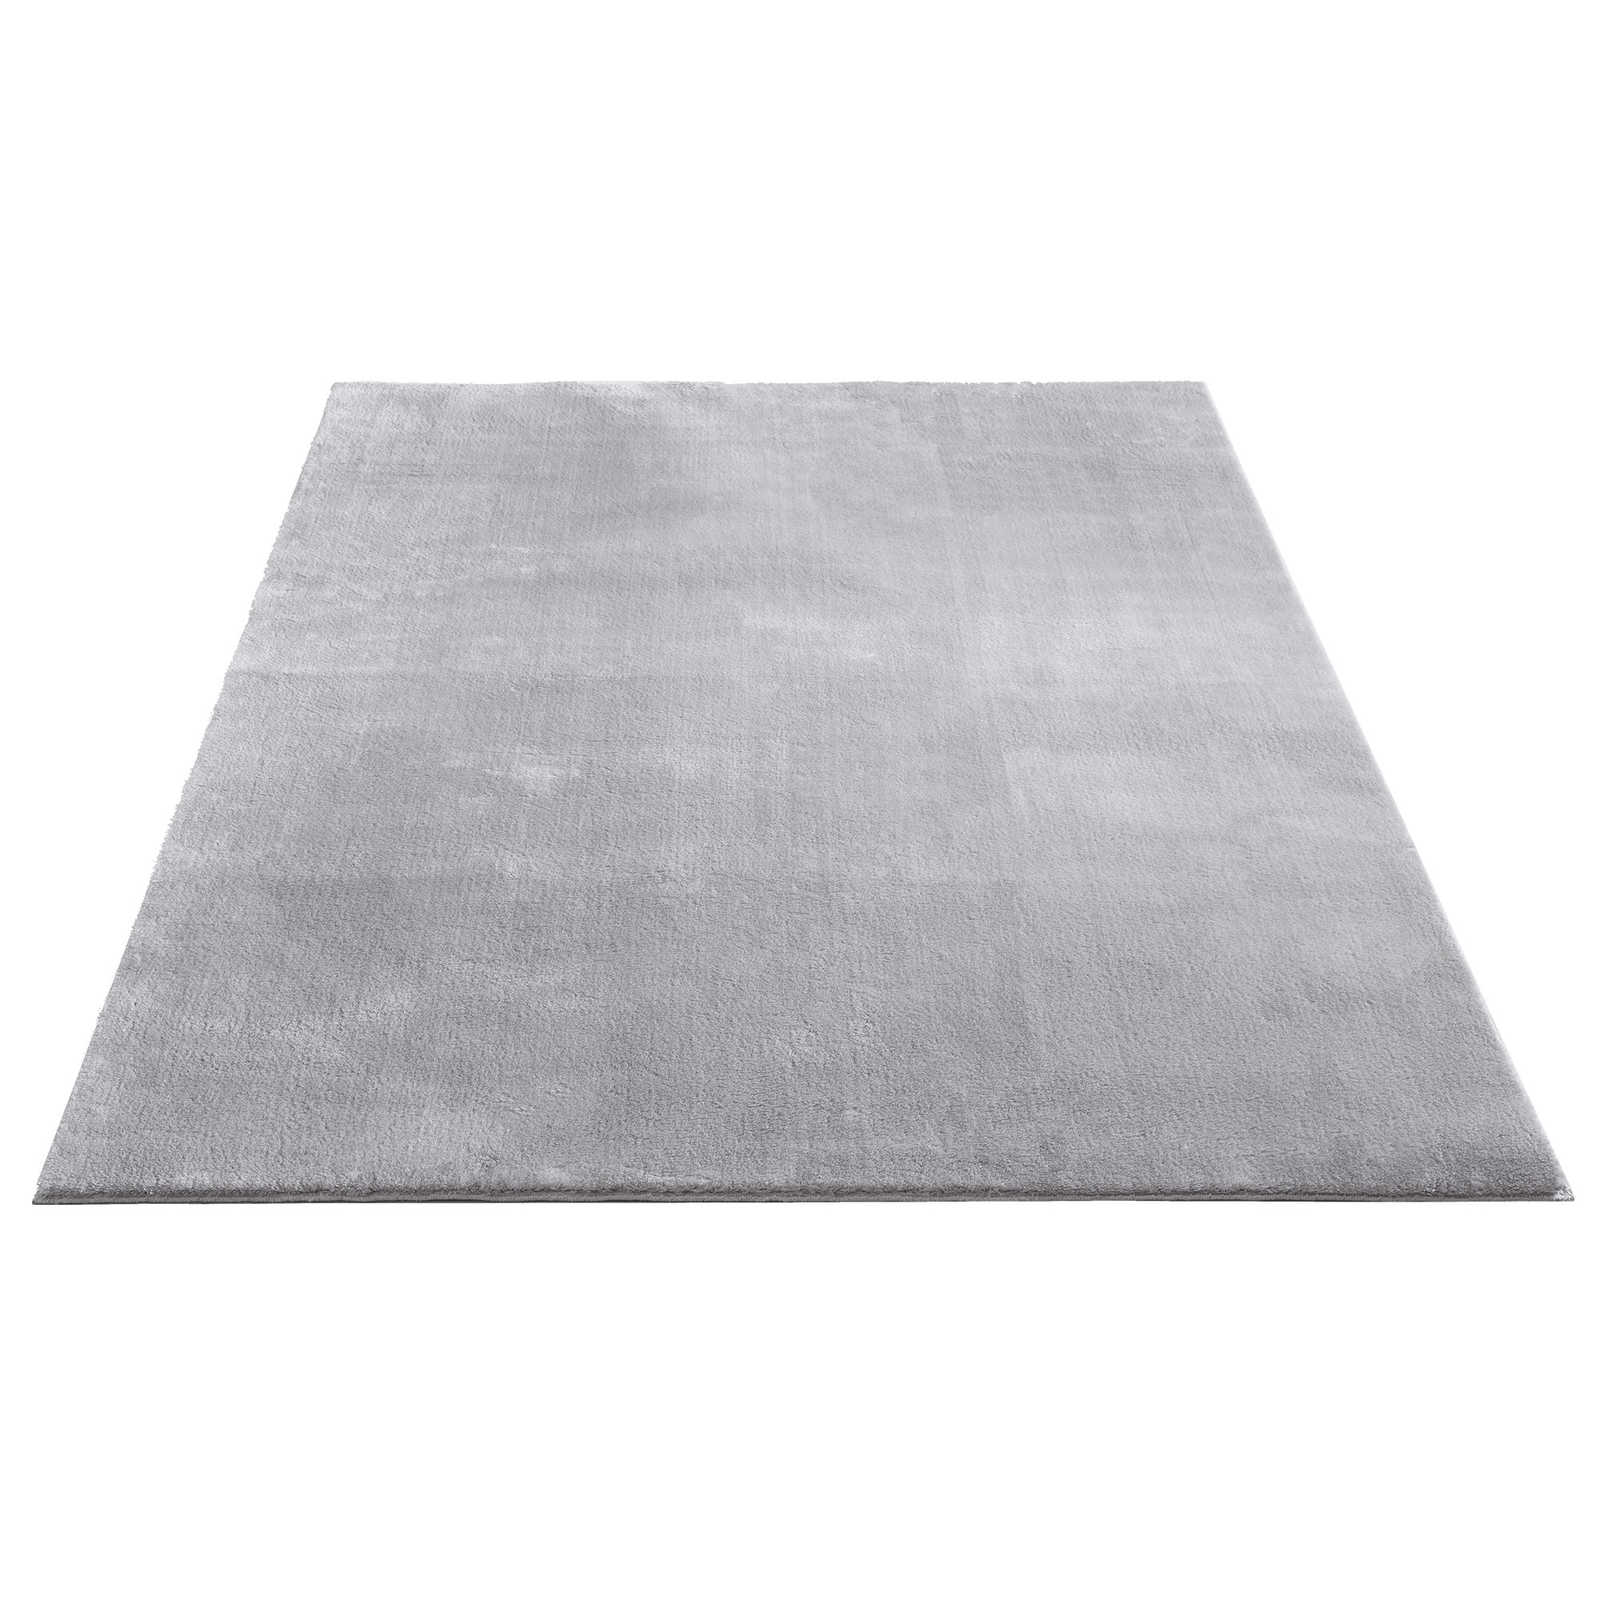 Feiner Hochflor Teppich in Grau – 340 x 240 cm
